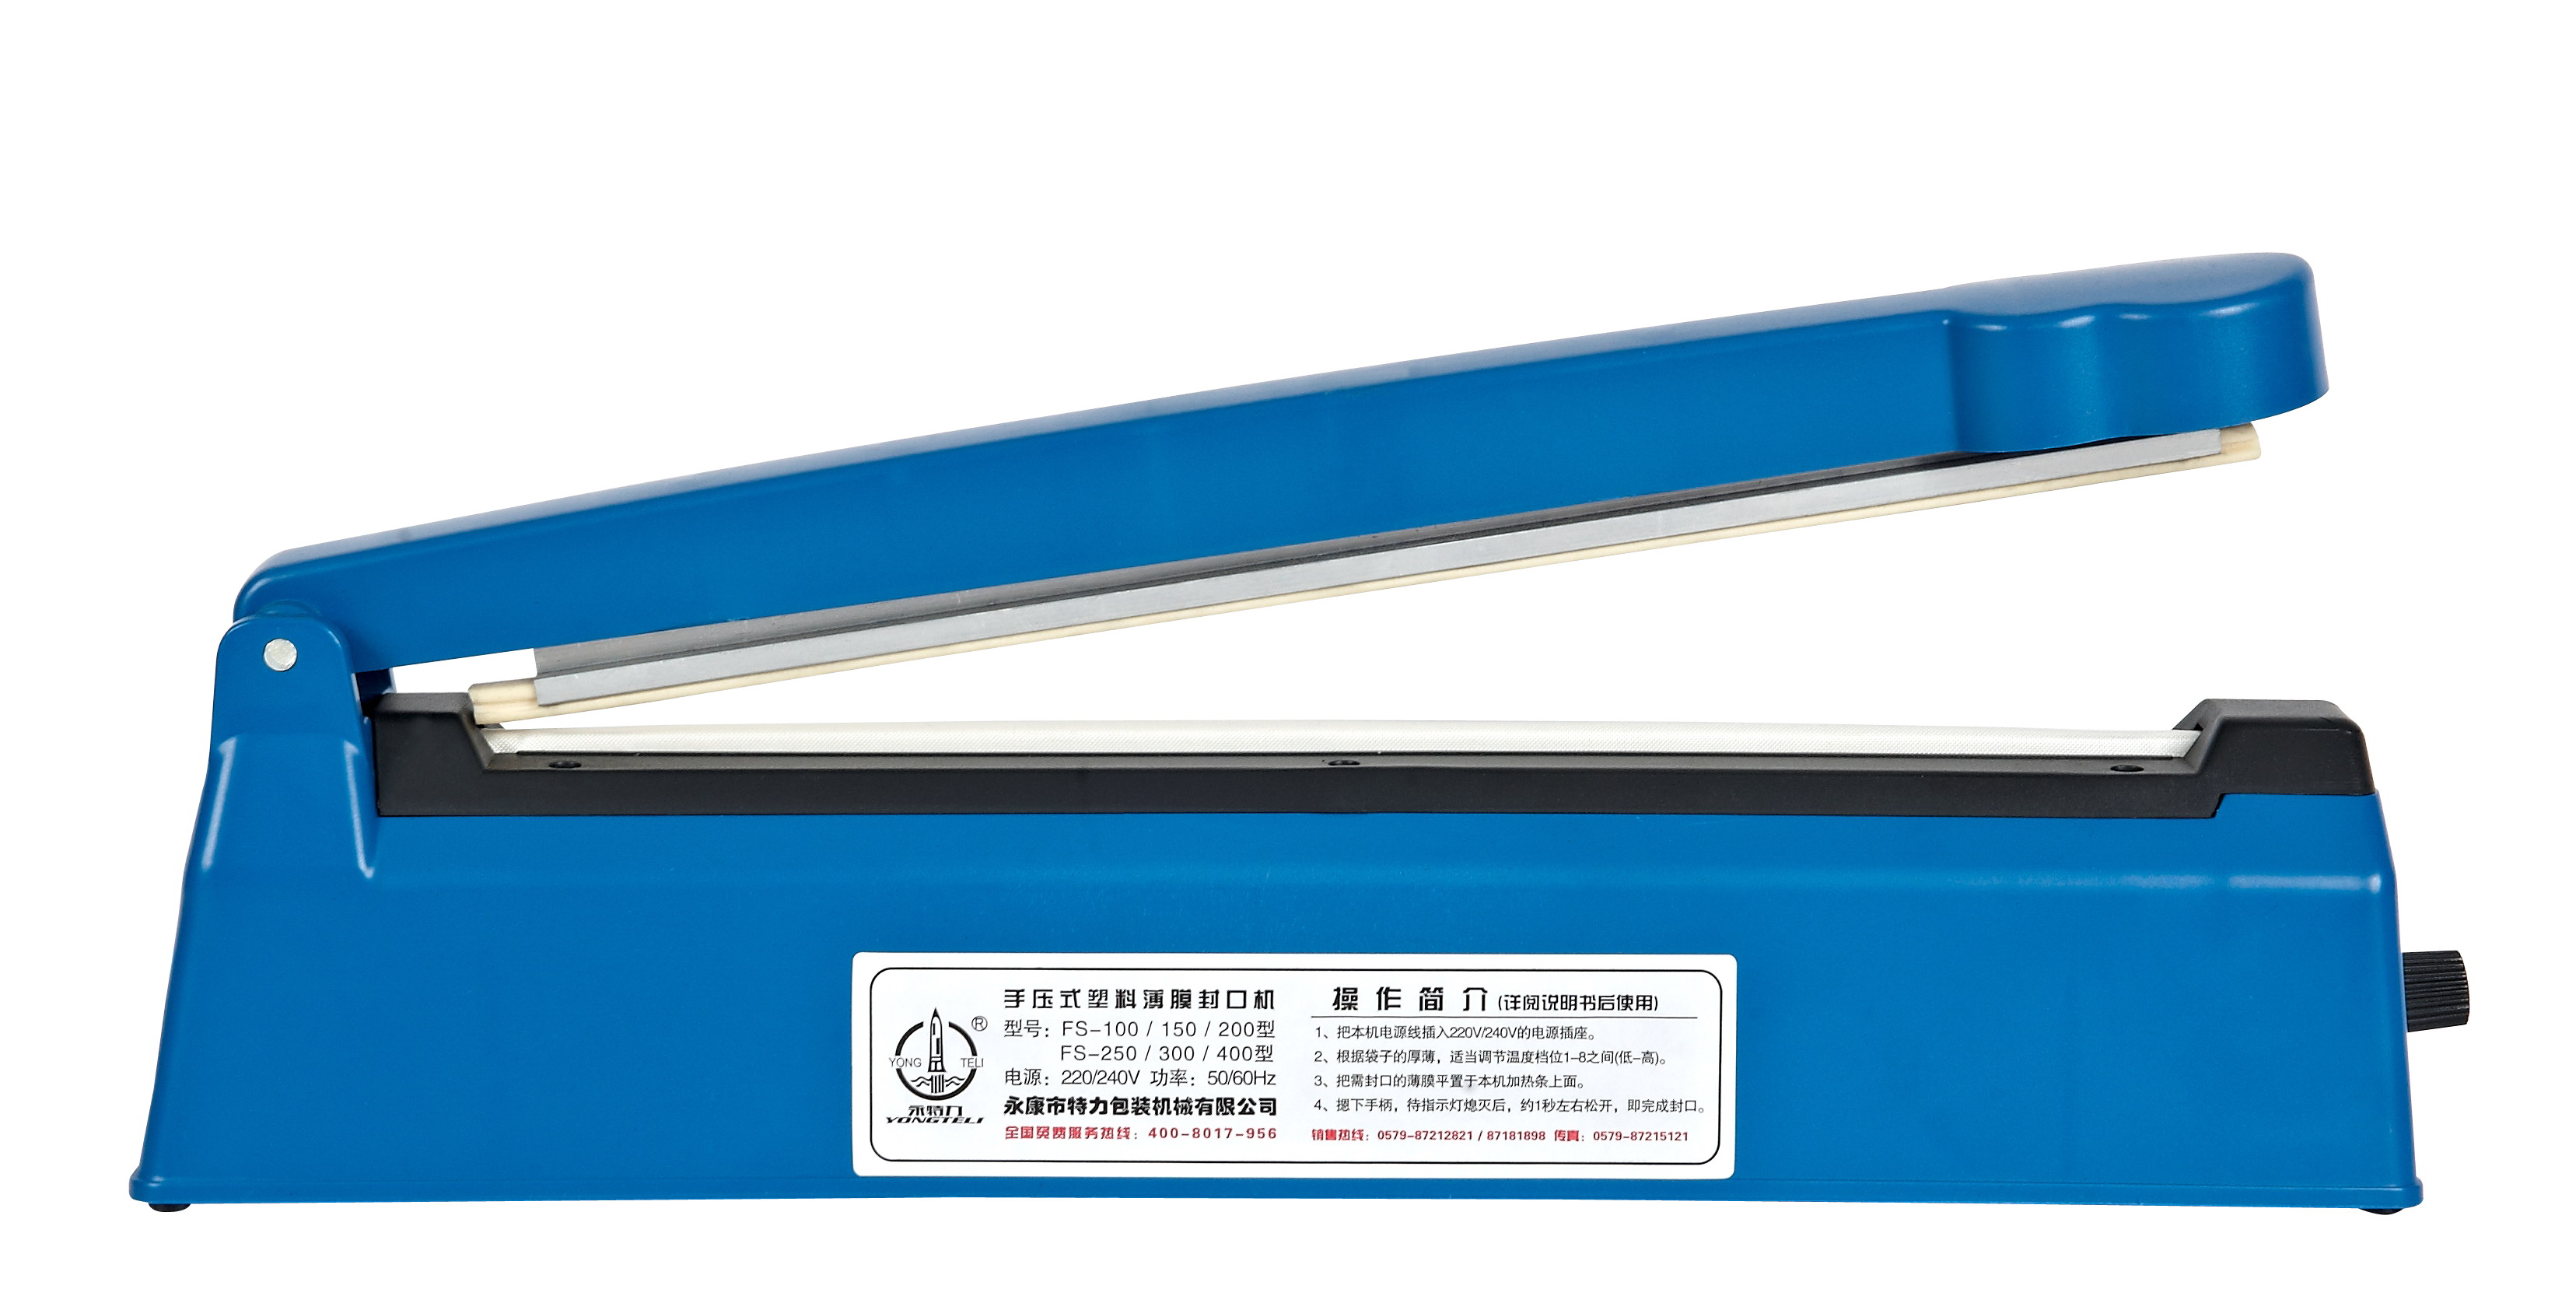 Zhejiang Tianyu industry Co. Ltd Factory Production Export Manual Impulse Sealer Sealing 3.0 mm Width PFS Series Plastic Film Sealing Machine